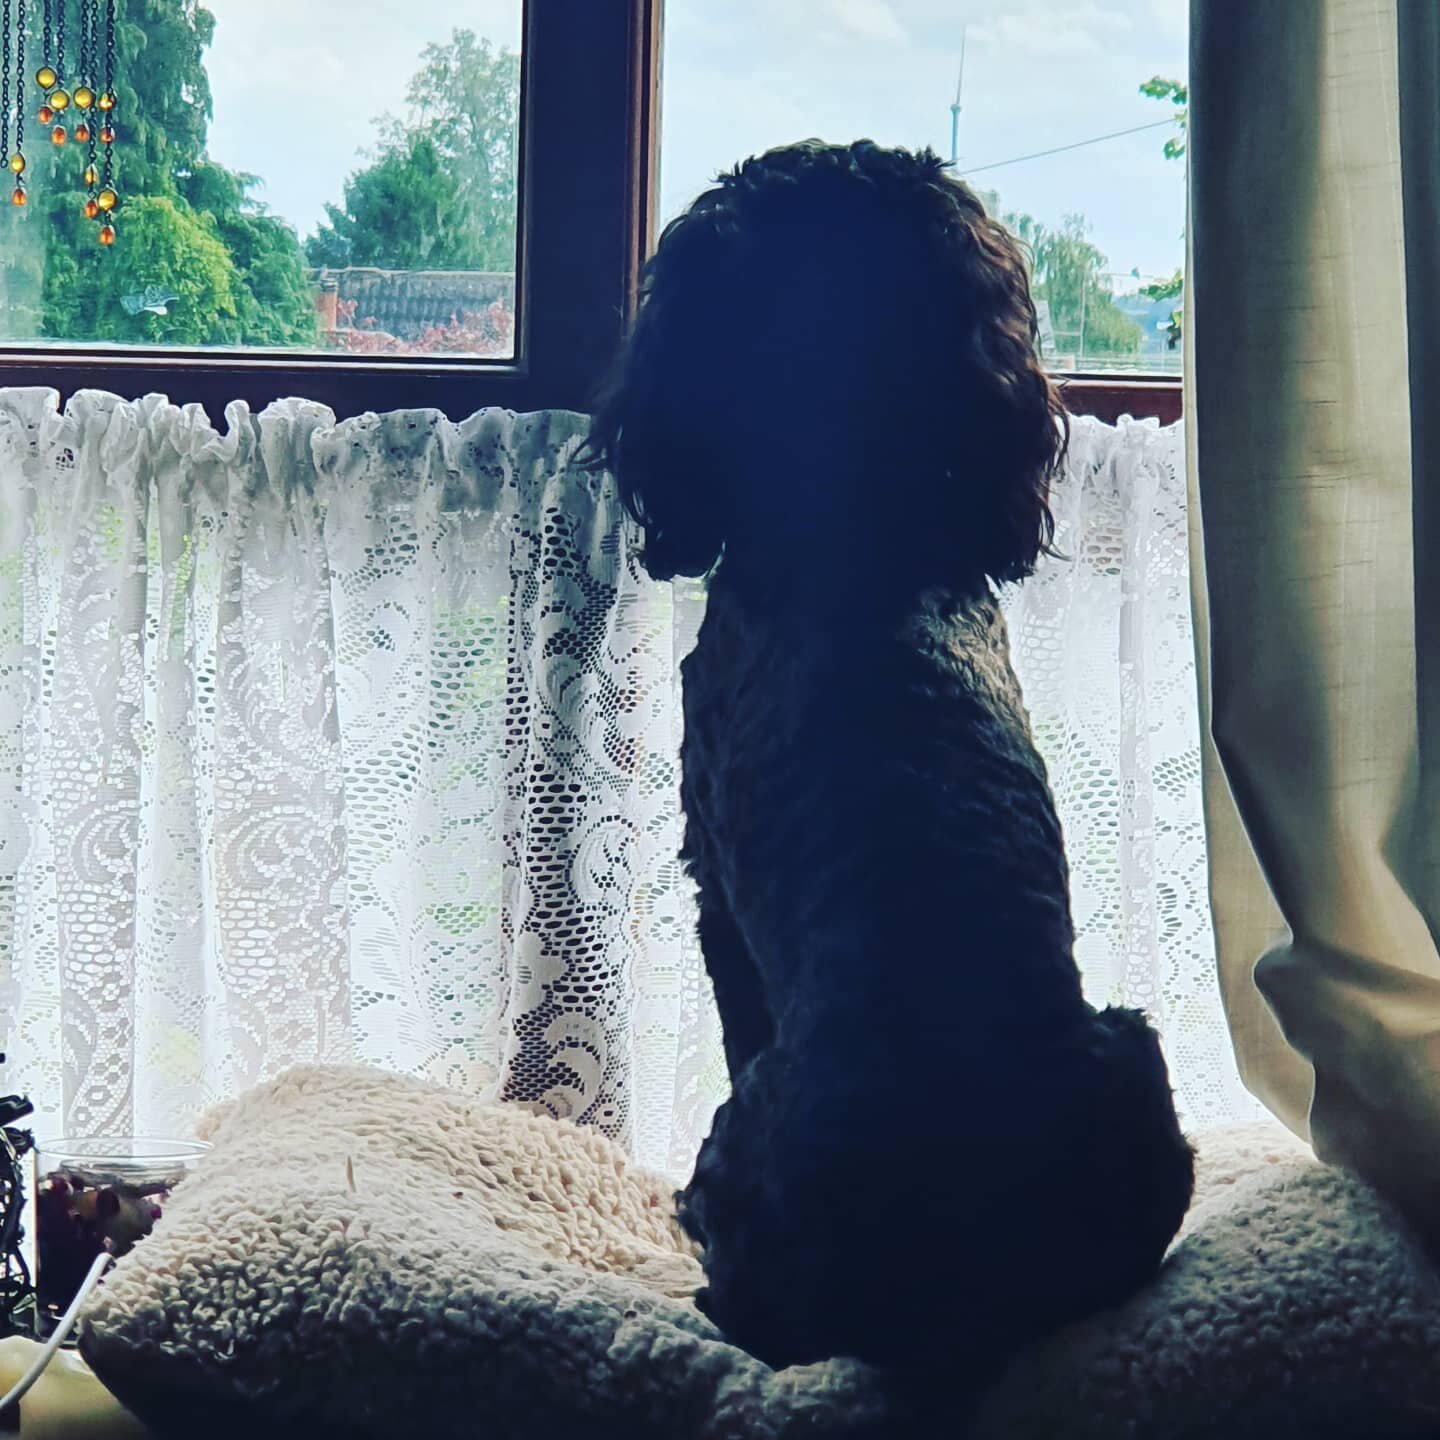 Little Luna waiting for daddy to come home! Ah my baby girl...
#ilovemydog #iloveLuna #cockapoo #cockapoosrule